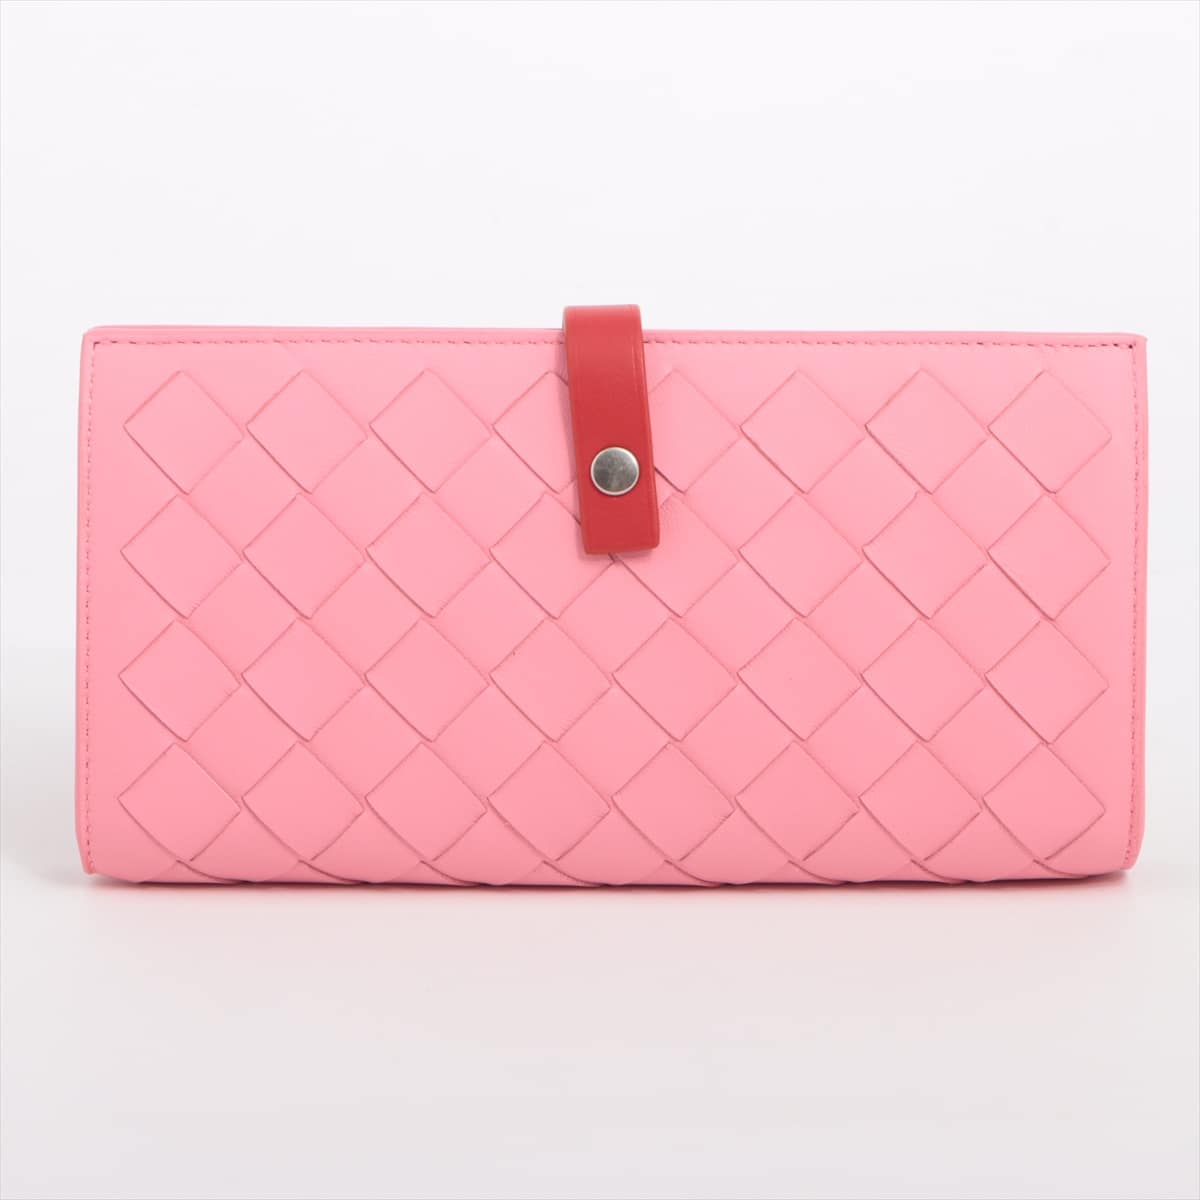 Bottega Veneta Intrecciato Leather Wallet Pink